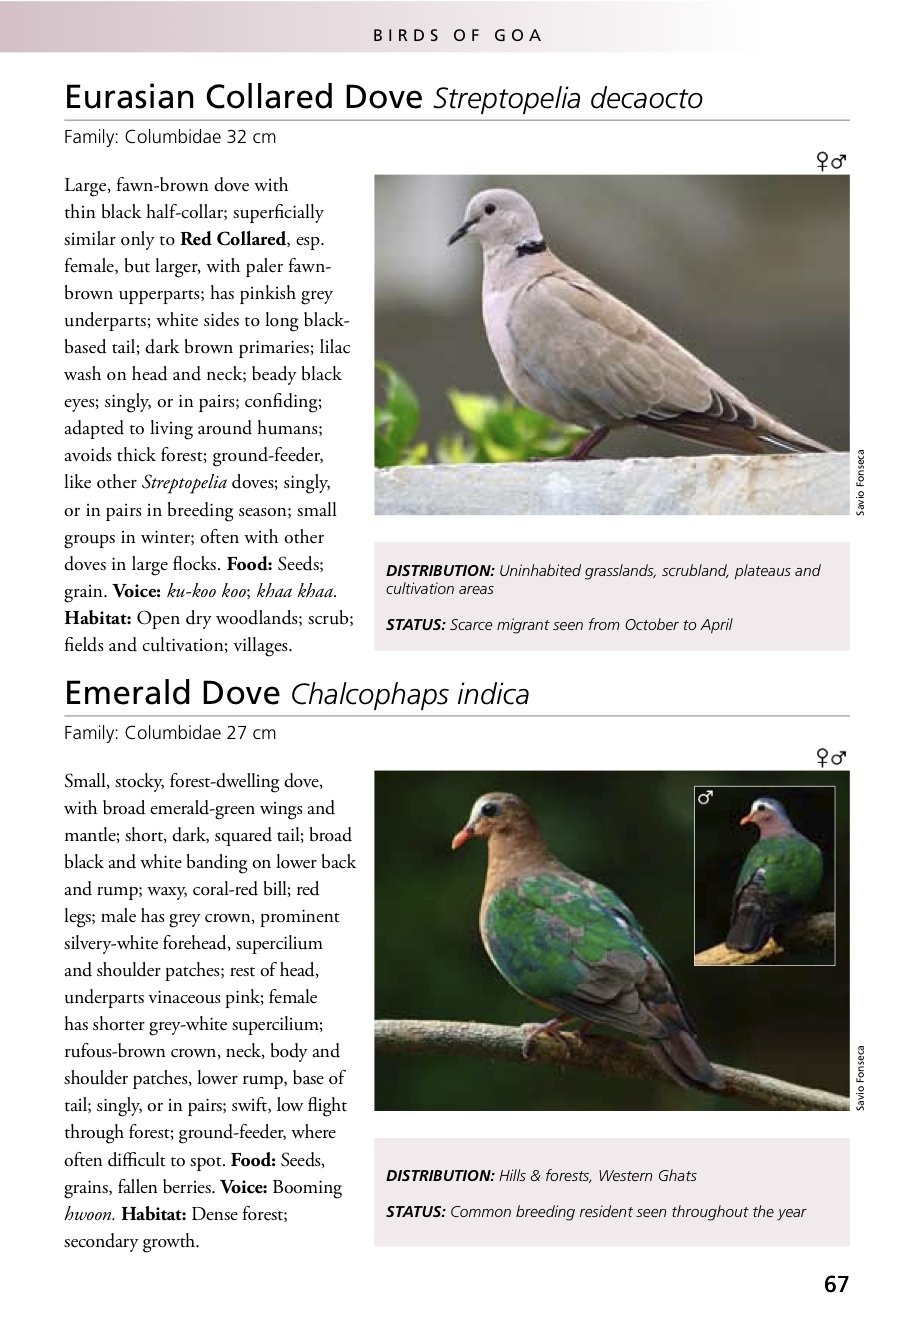 The Photographic Guide to the Birds of Goa - by Bikram Grewal & Savio  Fonseca